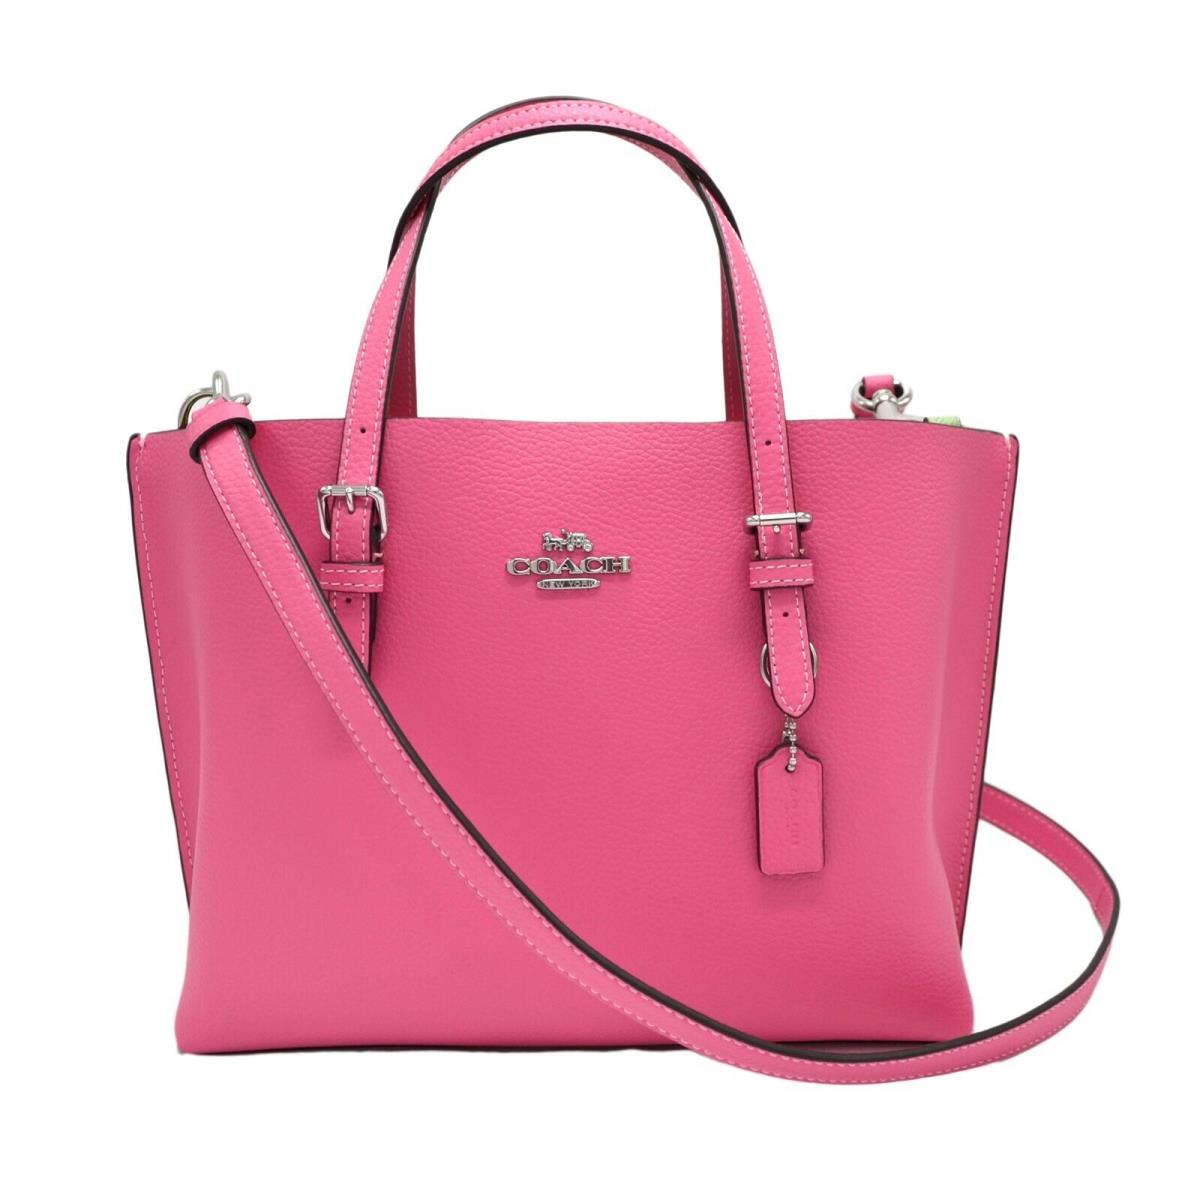 Coach Women`s Mollie Tote 25 Crossbody Purse Logo Leather Handbag Pink - Pink Handle/Strap, Silver Hardware, Pink Exterior